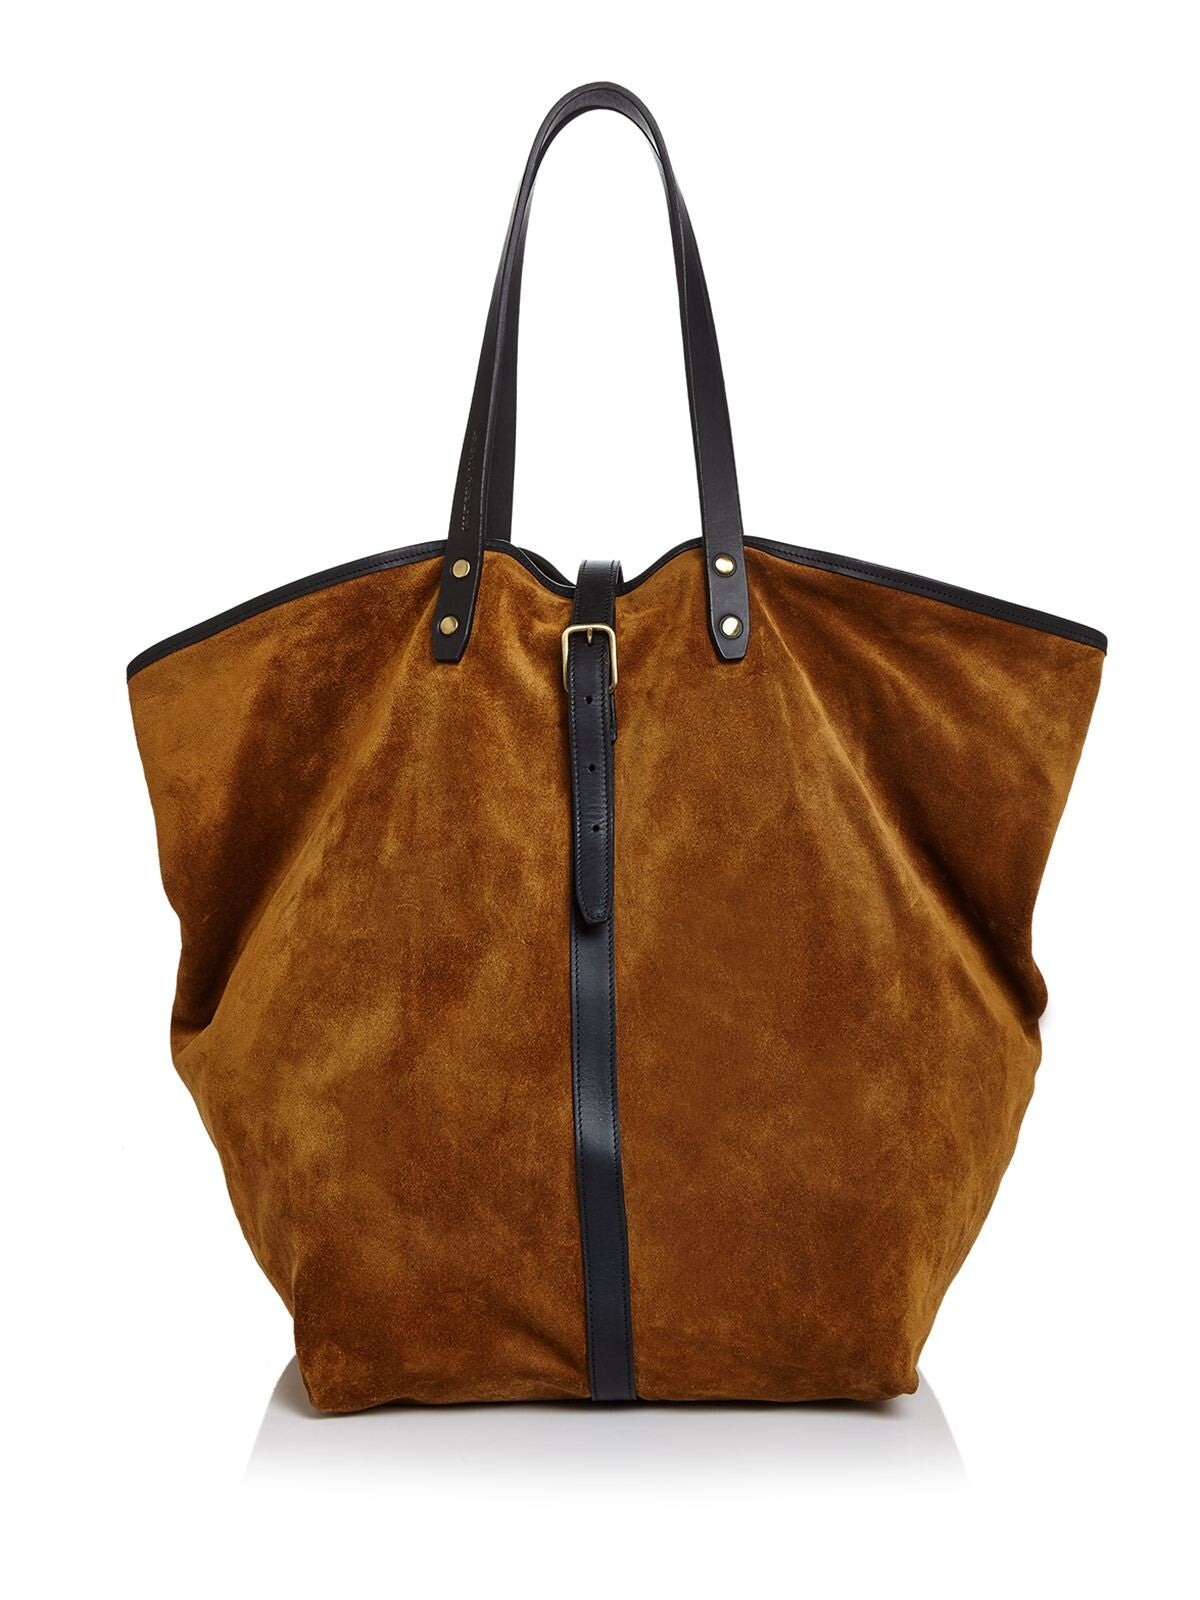 CREATURES OF COMFORT Women's Brown Suede Double Flat Strap Tote Handbag Purse